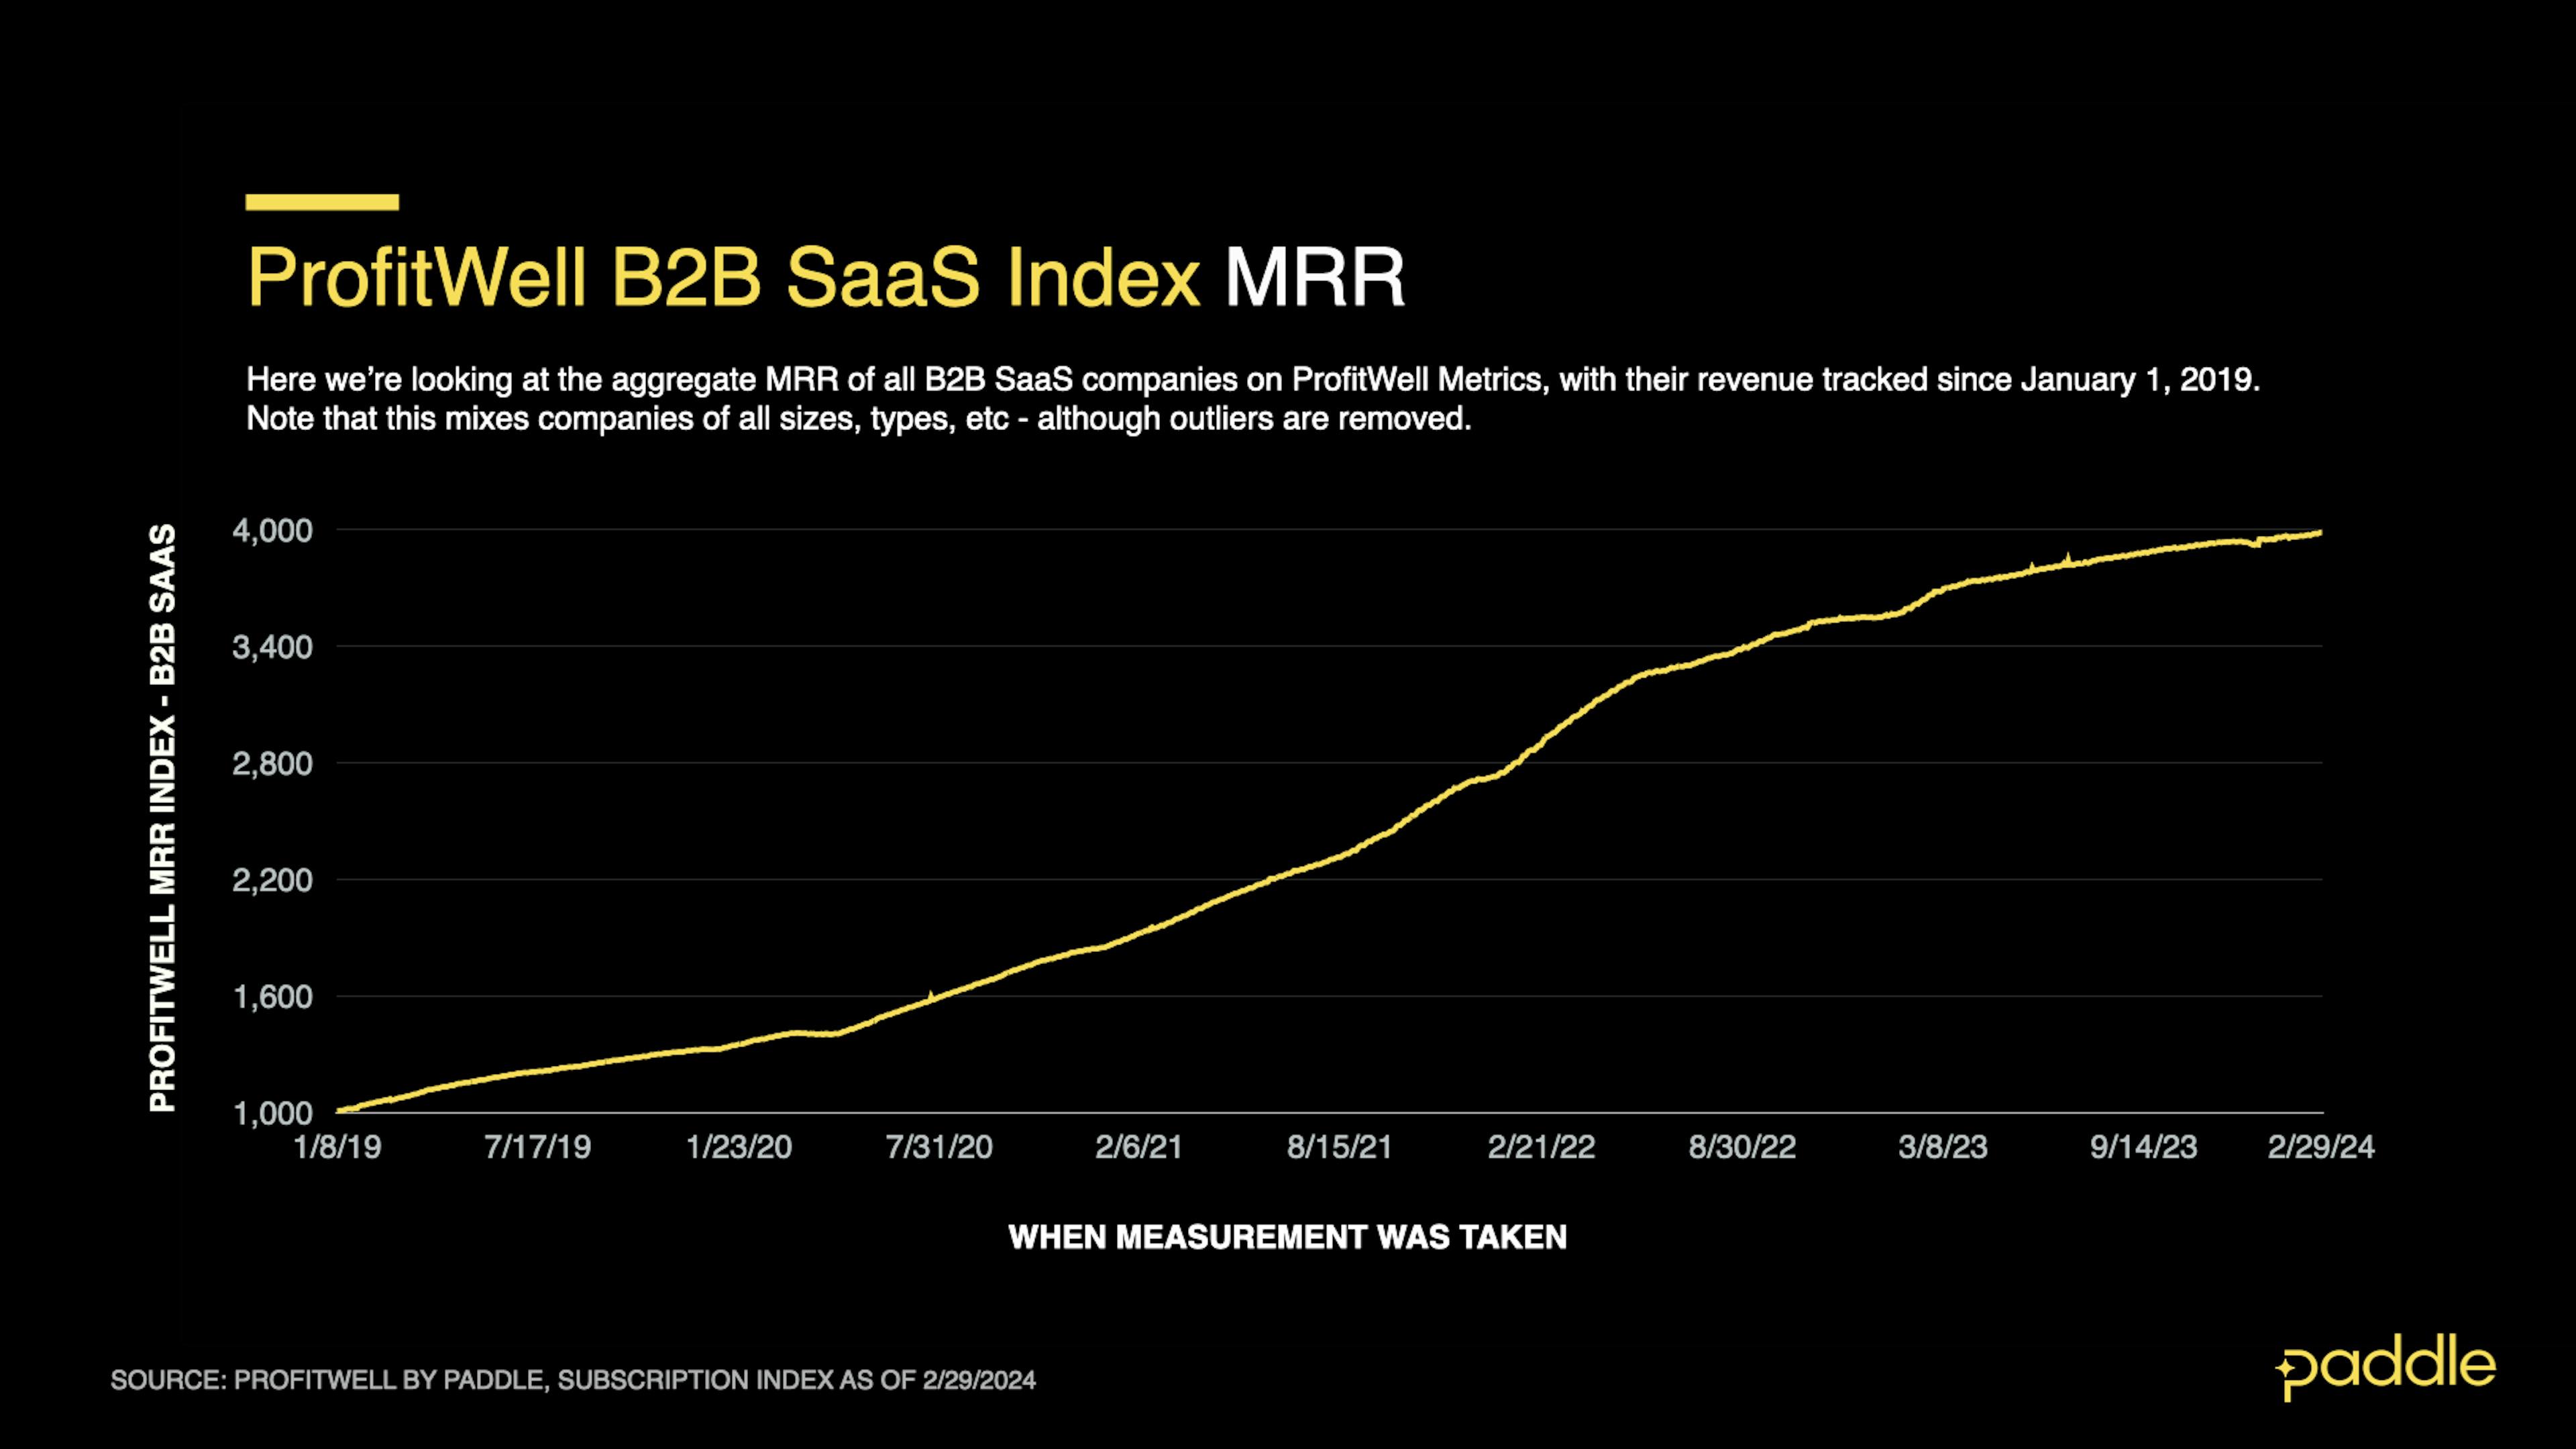 ProfitWell B2B SaaS Index shows steady MRR growth